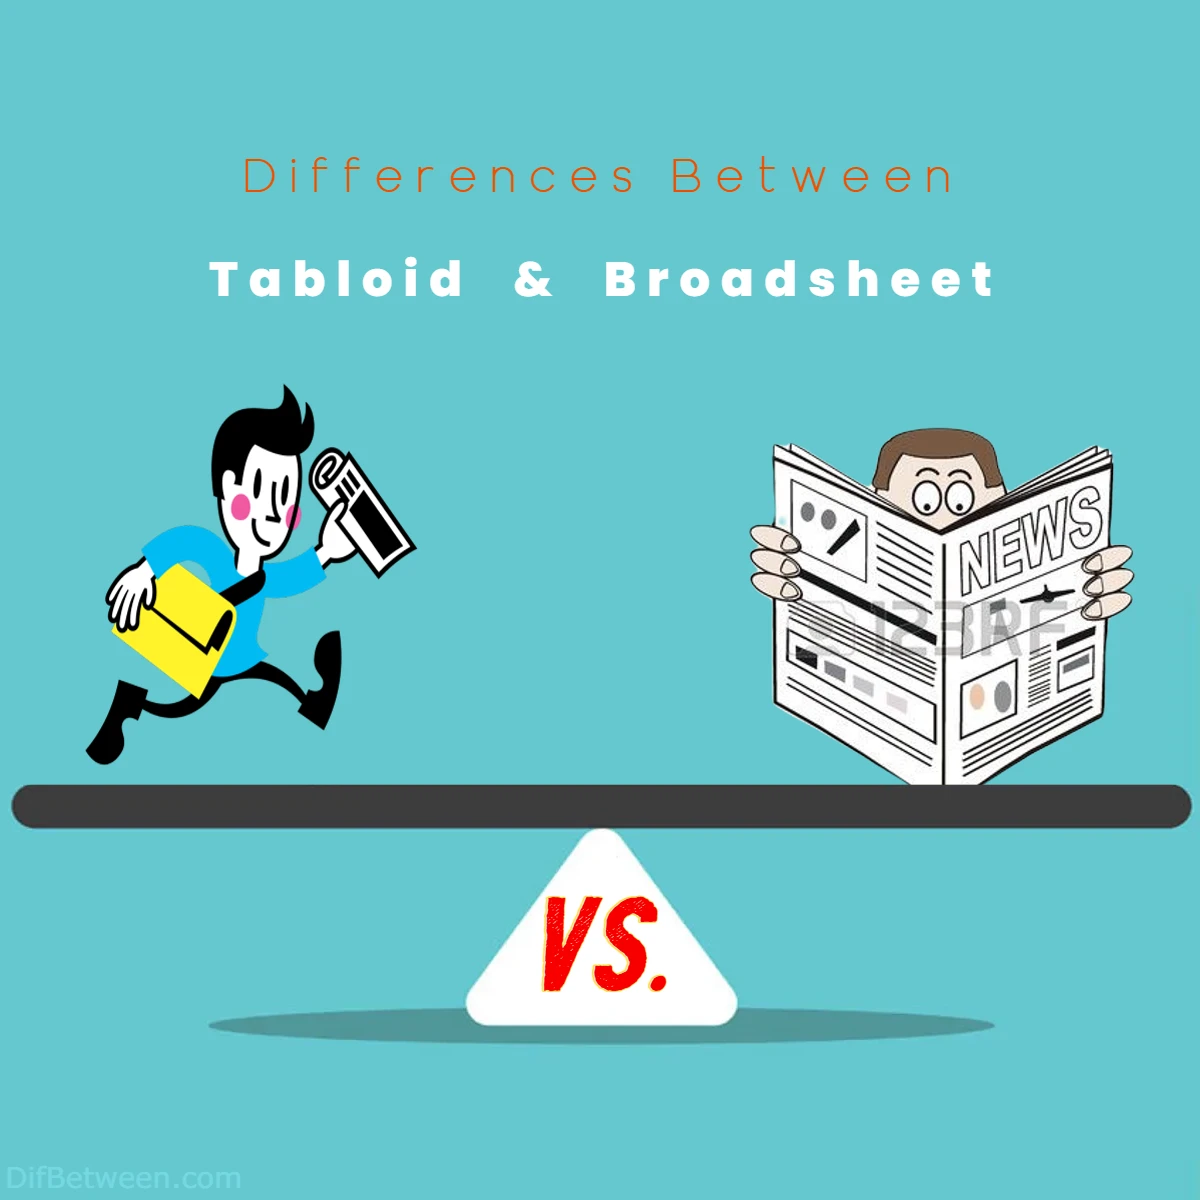 Differences Between Tabloid vs Broadsheet